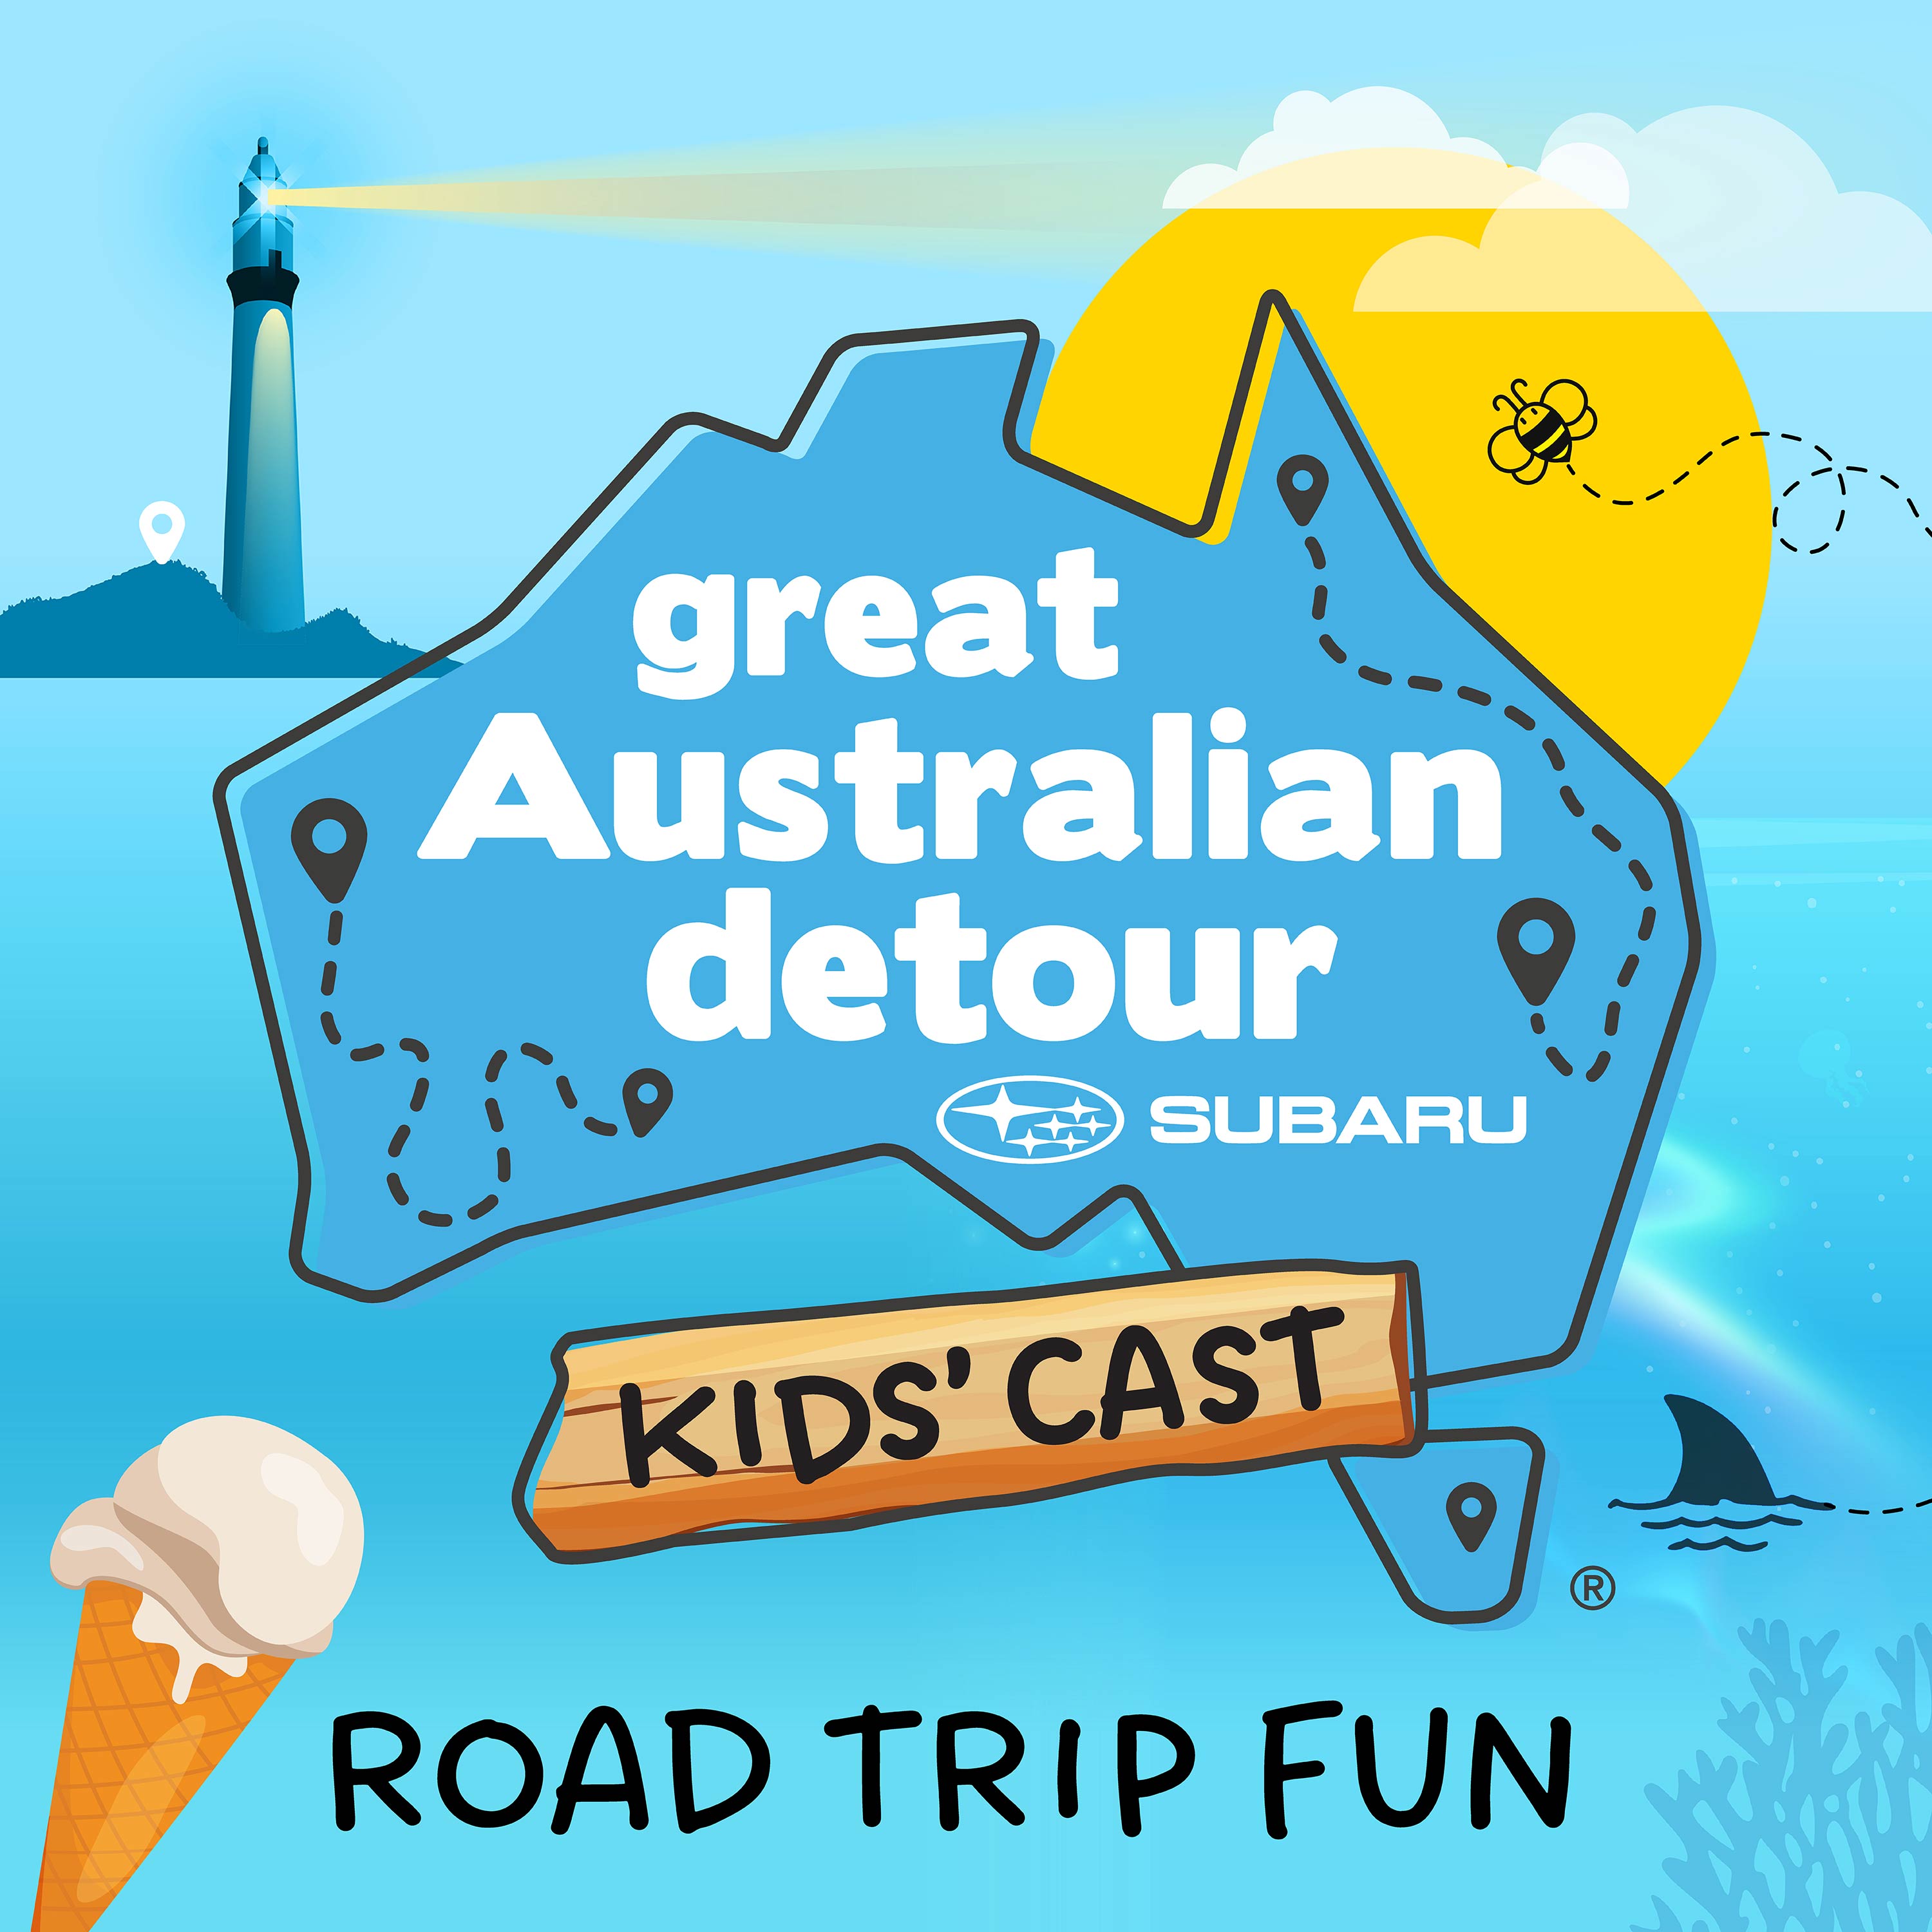 Subaru Australia launches the Great Australian Detour Kids' Cast